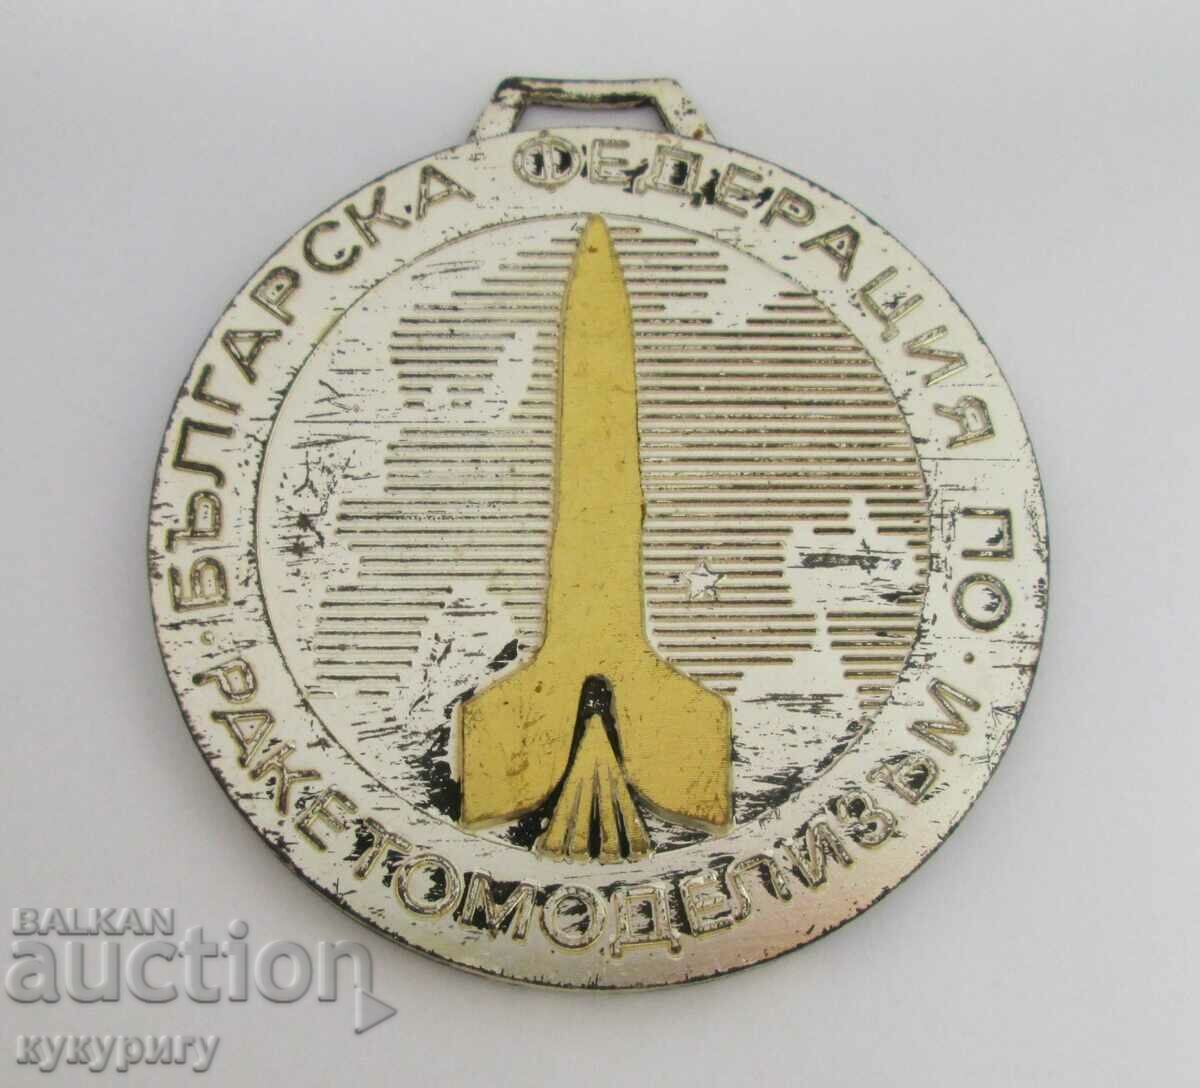 Veche medalie a Federației Bulgare de Rachete Model